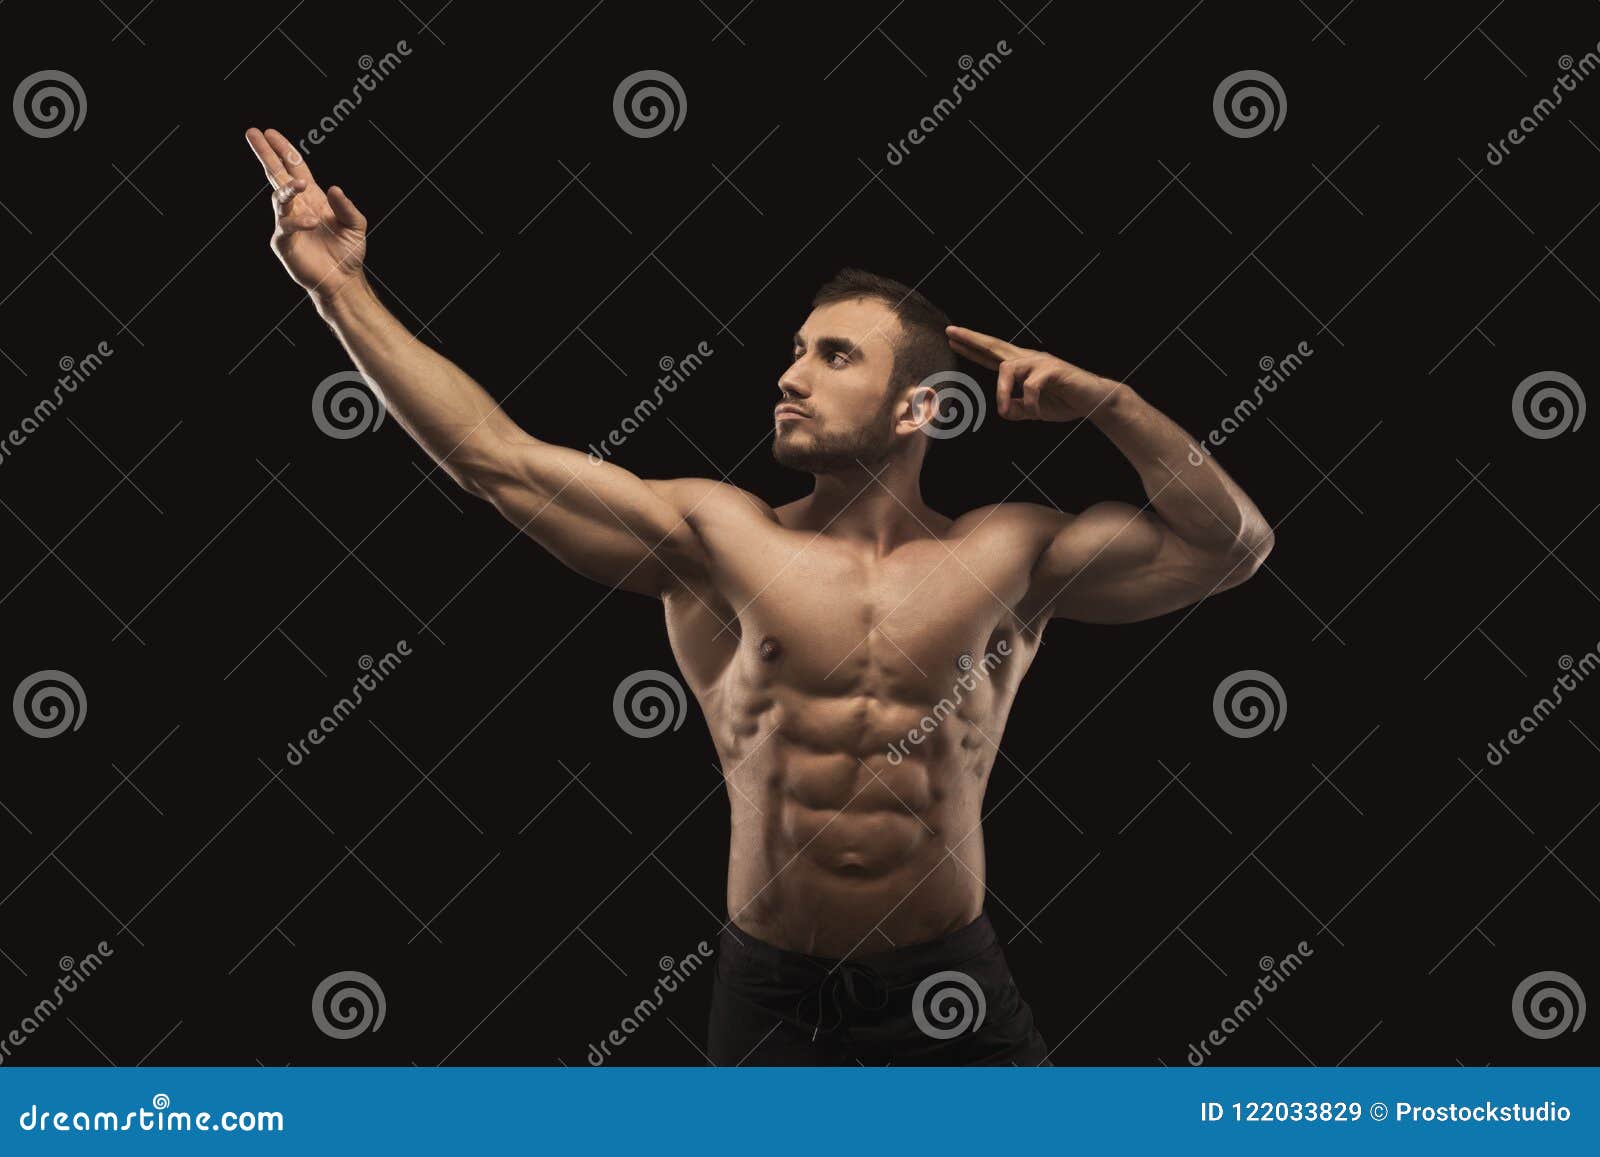 Big Dick Biceps - Big Dick Muscular Body | Gay Fetish XXX